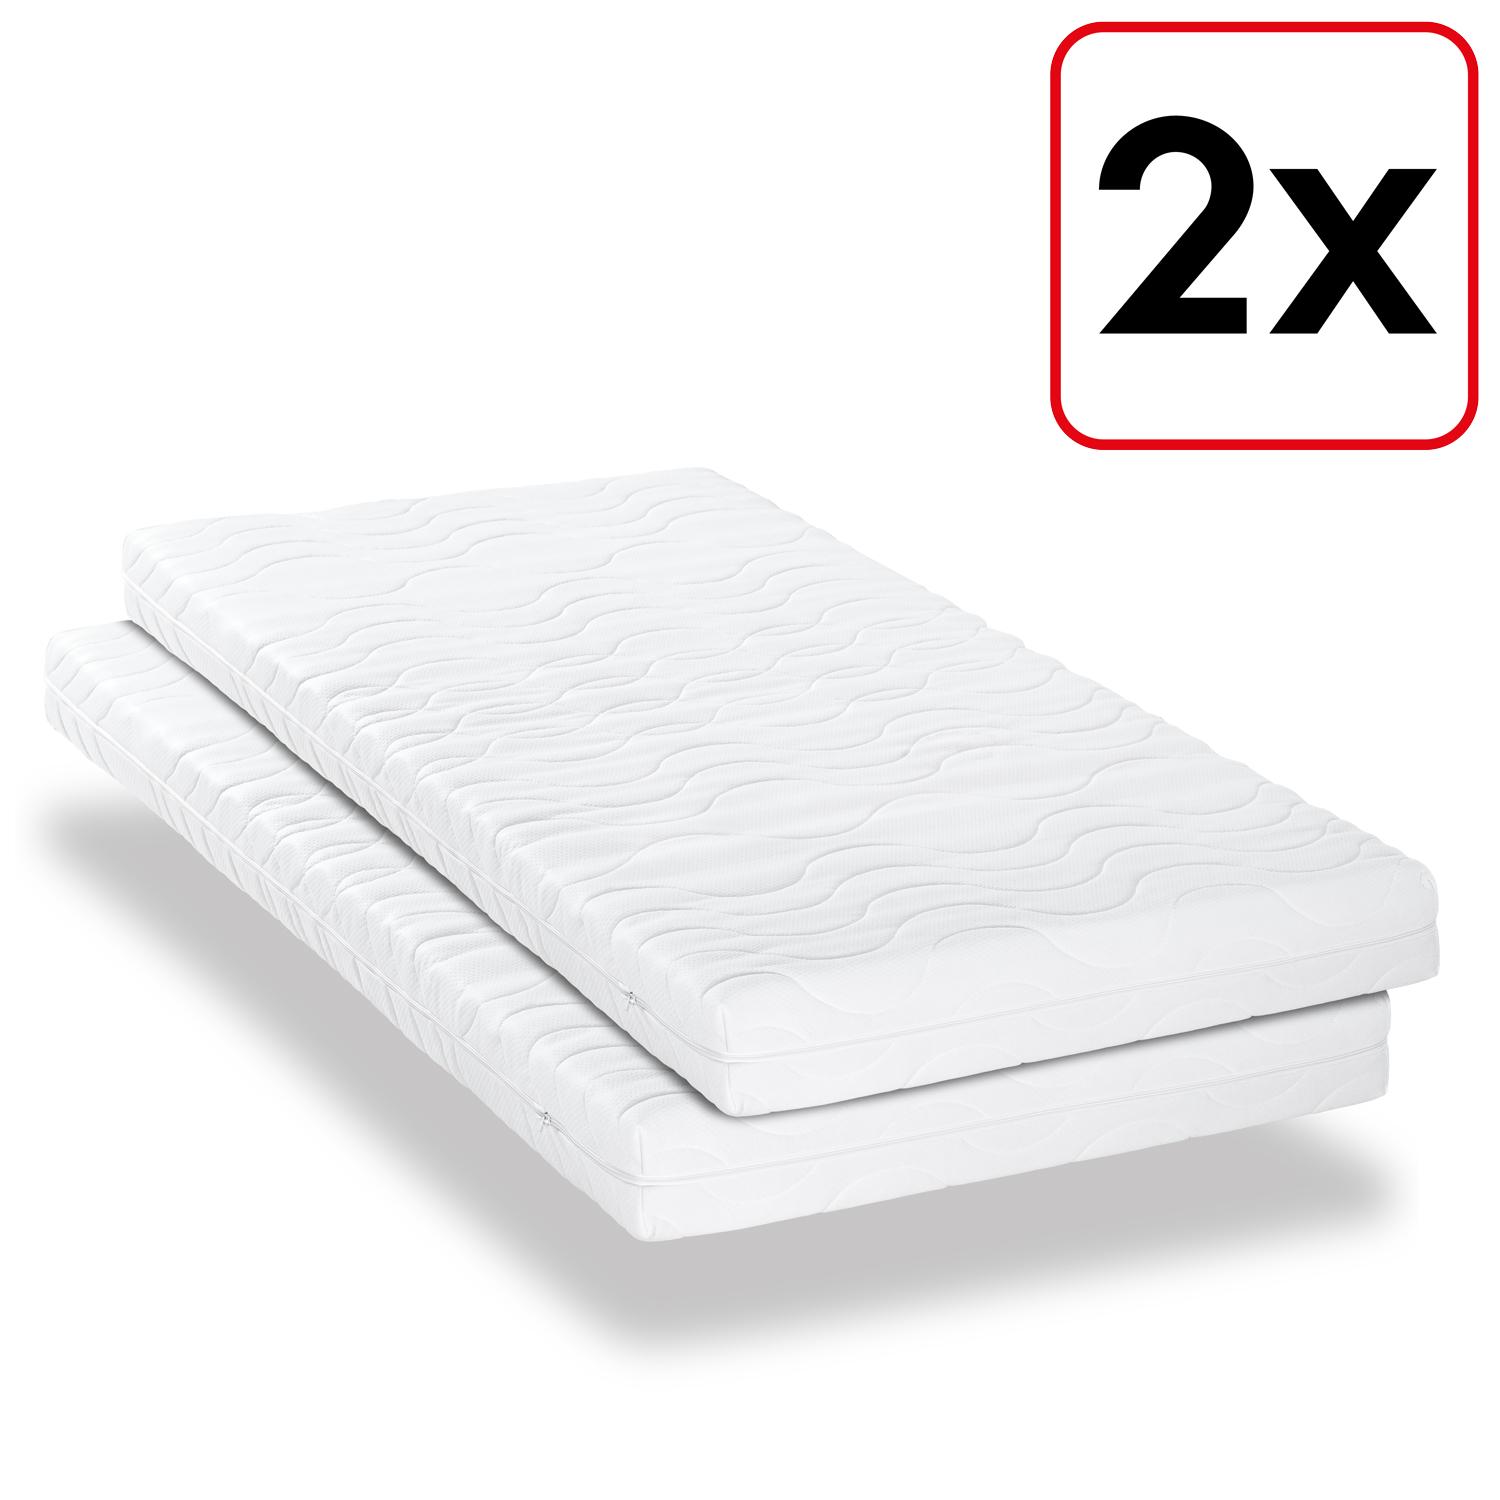 Double pack premium 7-zone mattress 100x200 cm CloudComfort, height 15 cm, firmness level H2/H3, twin set